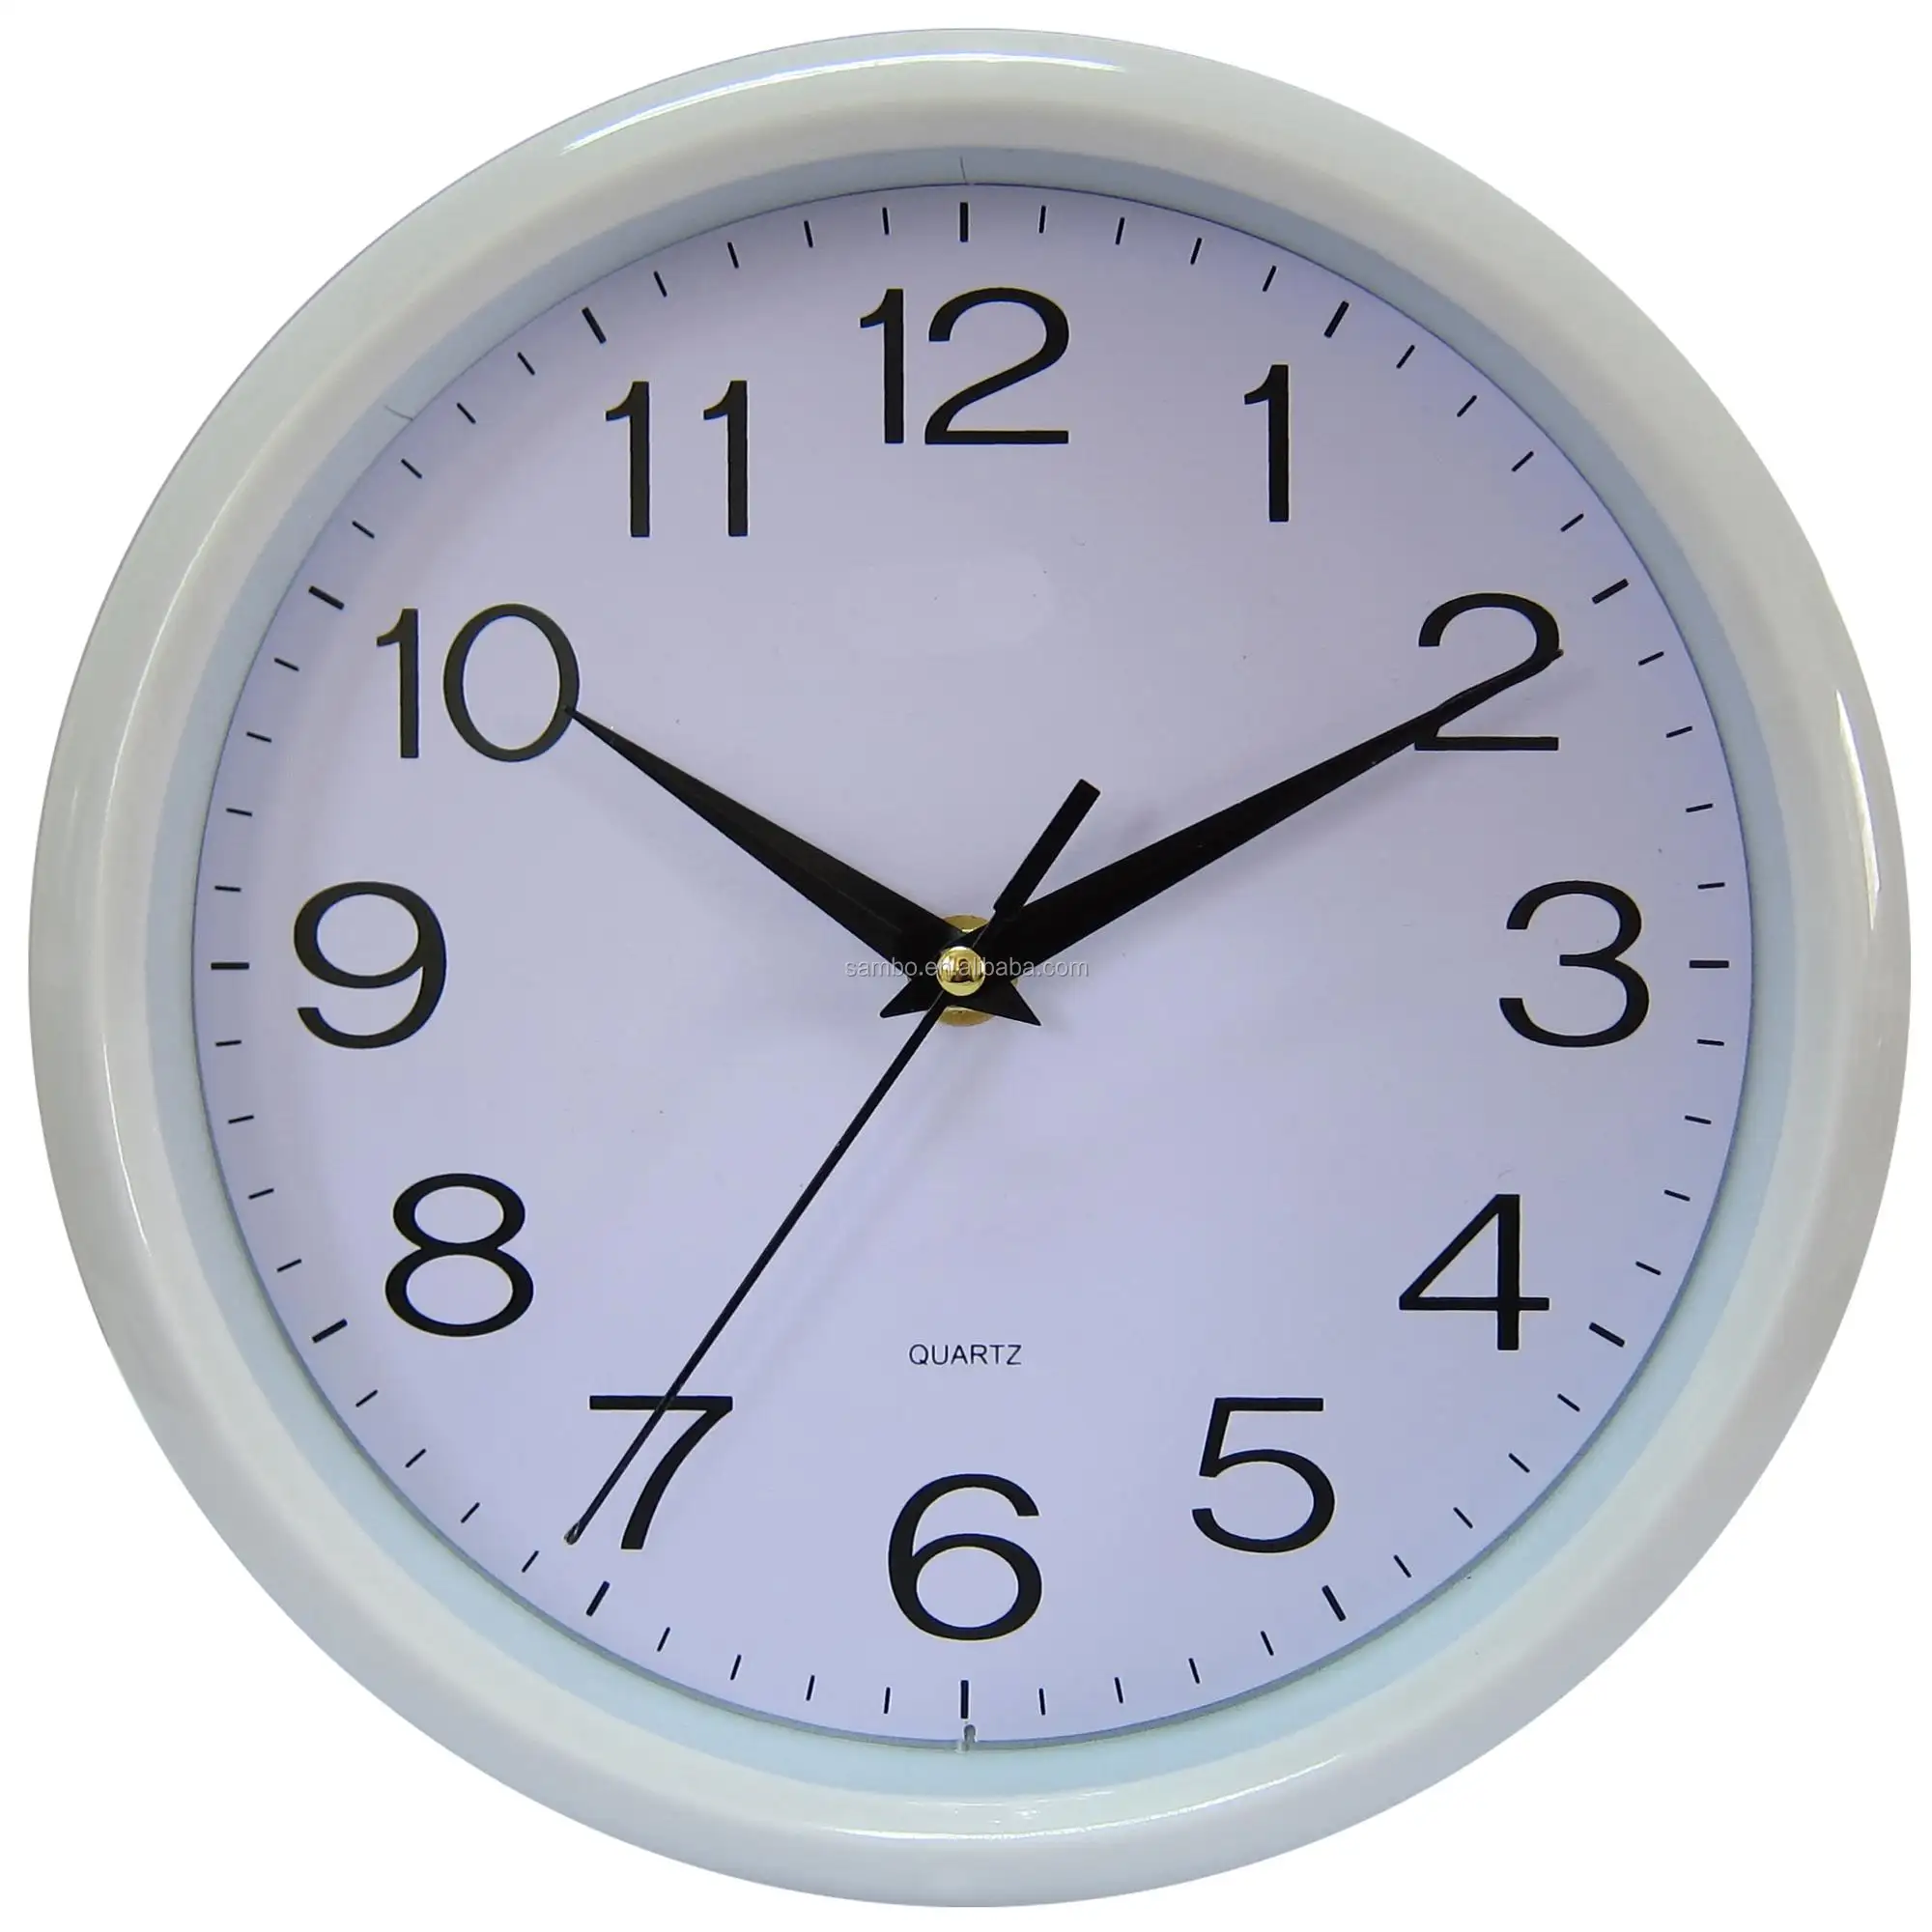 White Plastic Clock For Australia Market 9inch